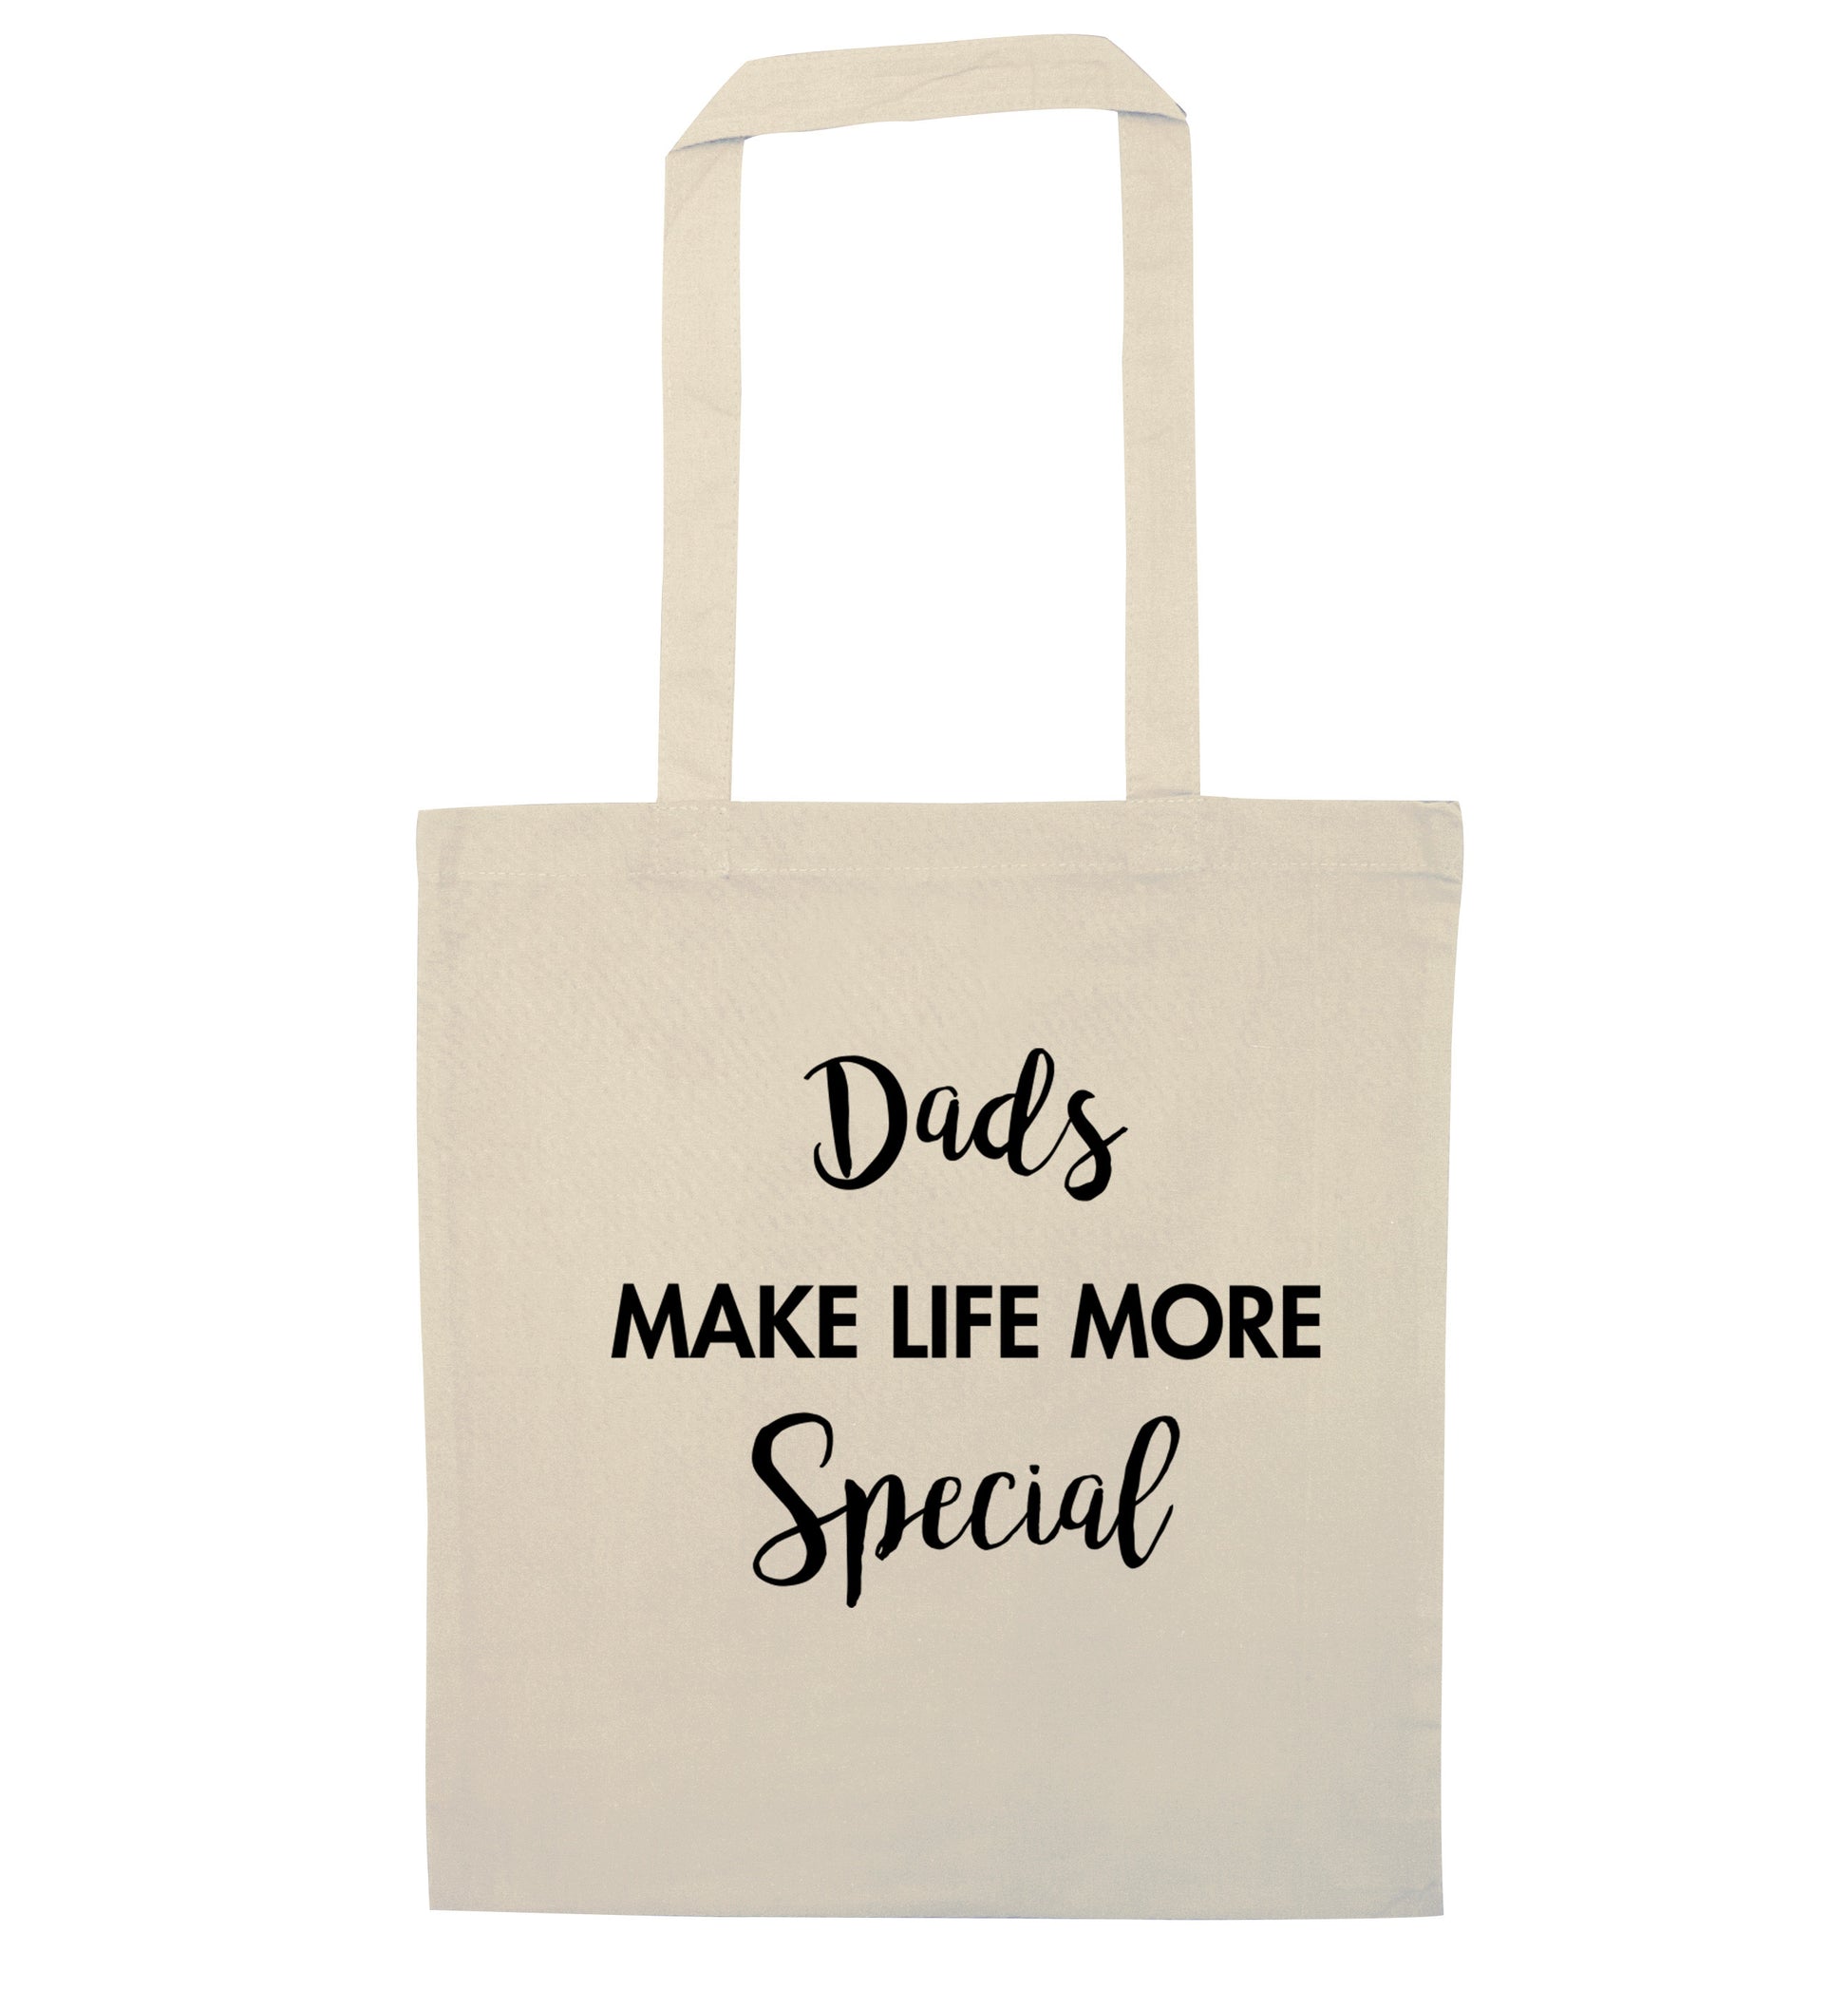 Dads make life more special natural tote bag